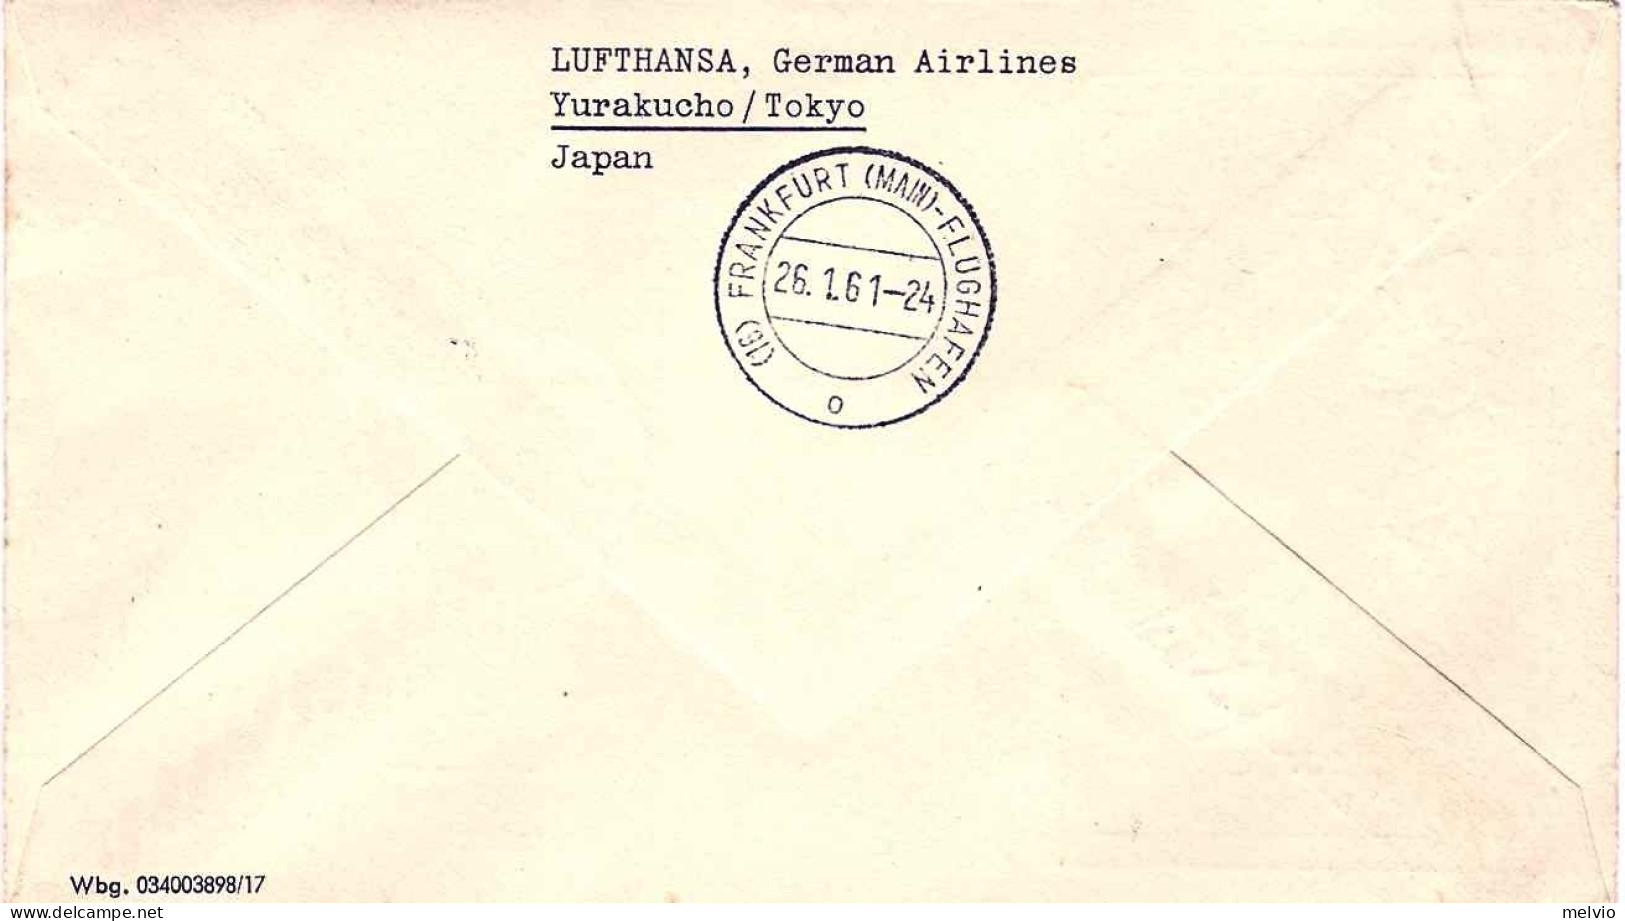 1961-Giappone Japan I^volo Lufthansa 647/640,al Verso Bollo D'arrivo A Francofor - Covers & Documents